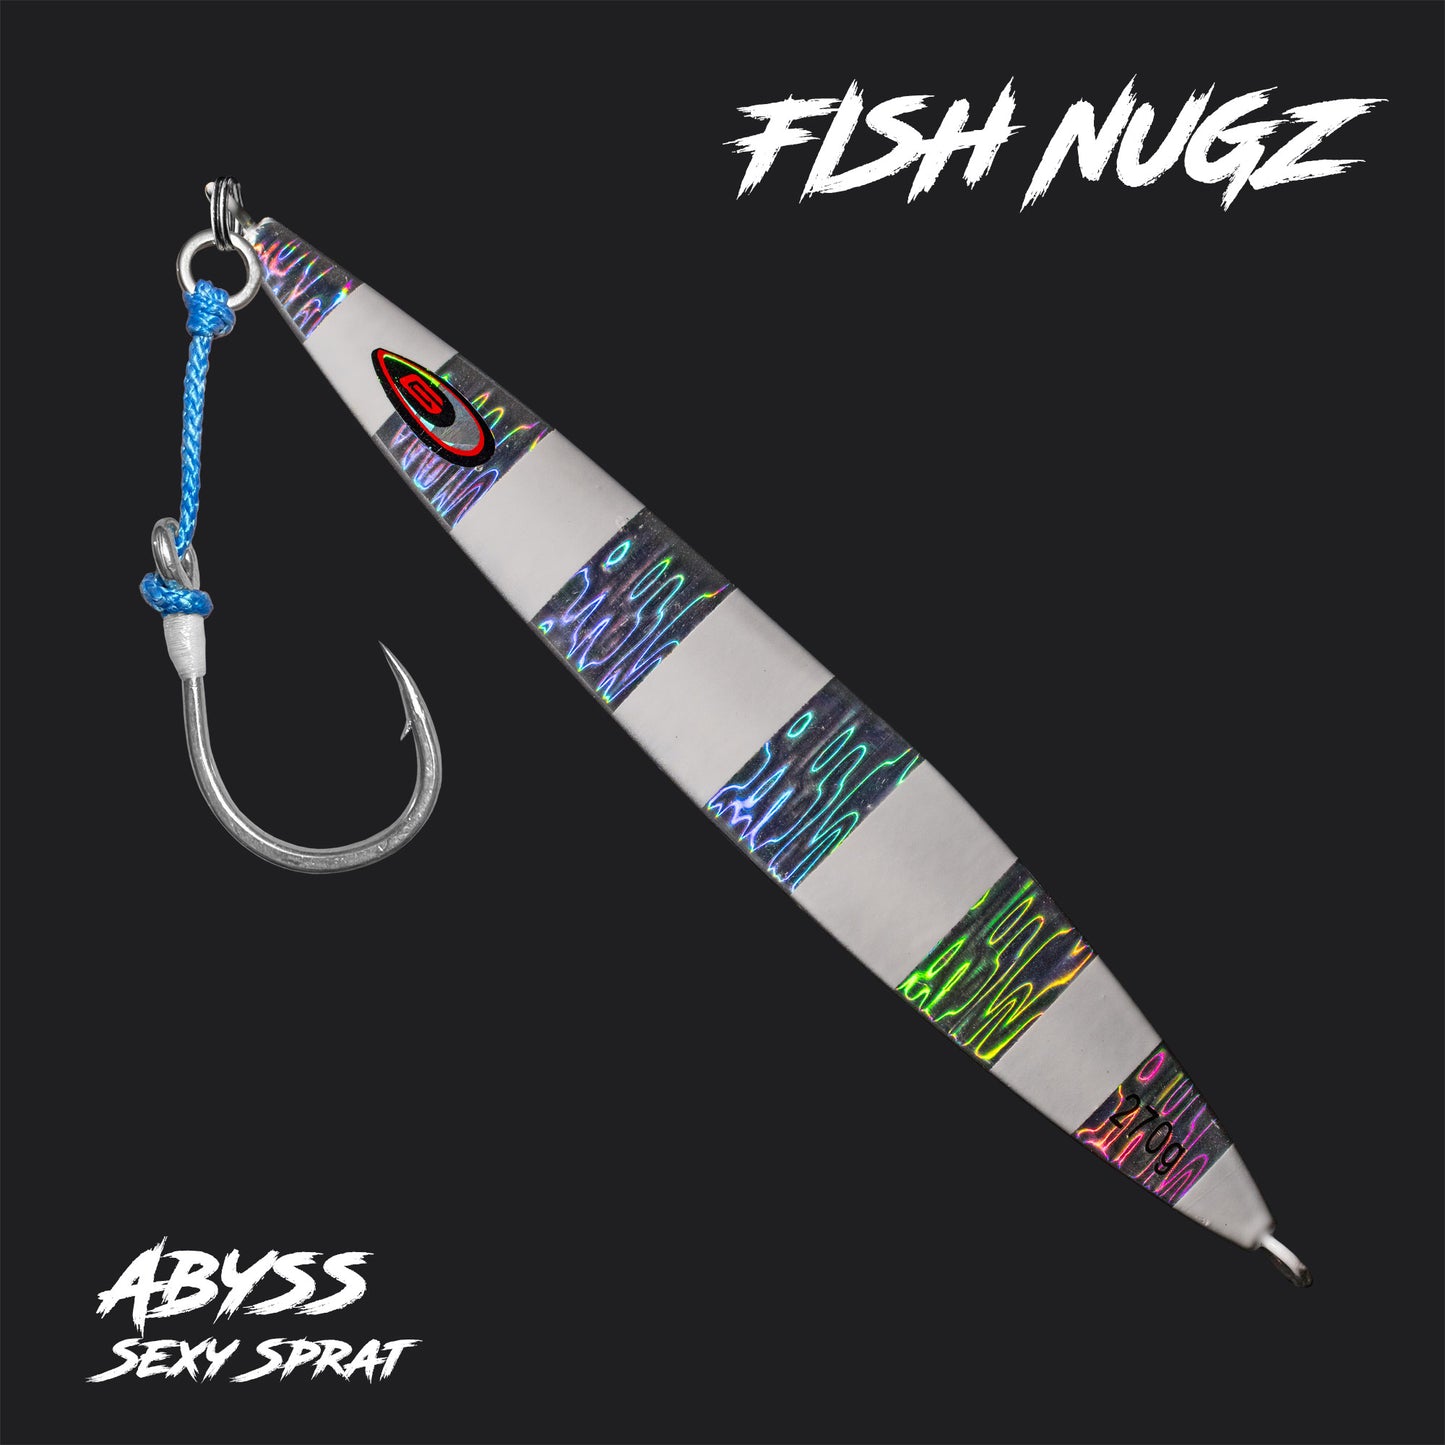 Fish Nugz Abyss Speed Jig in Sexy Sprat colour